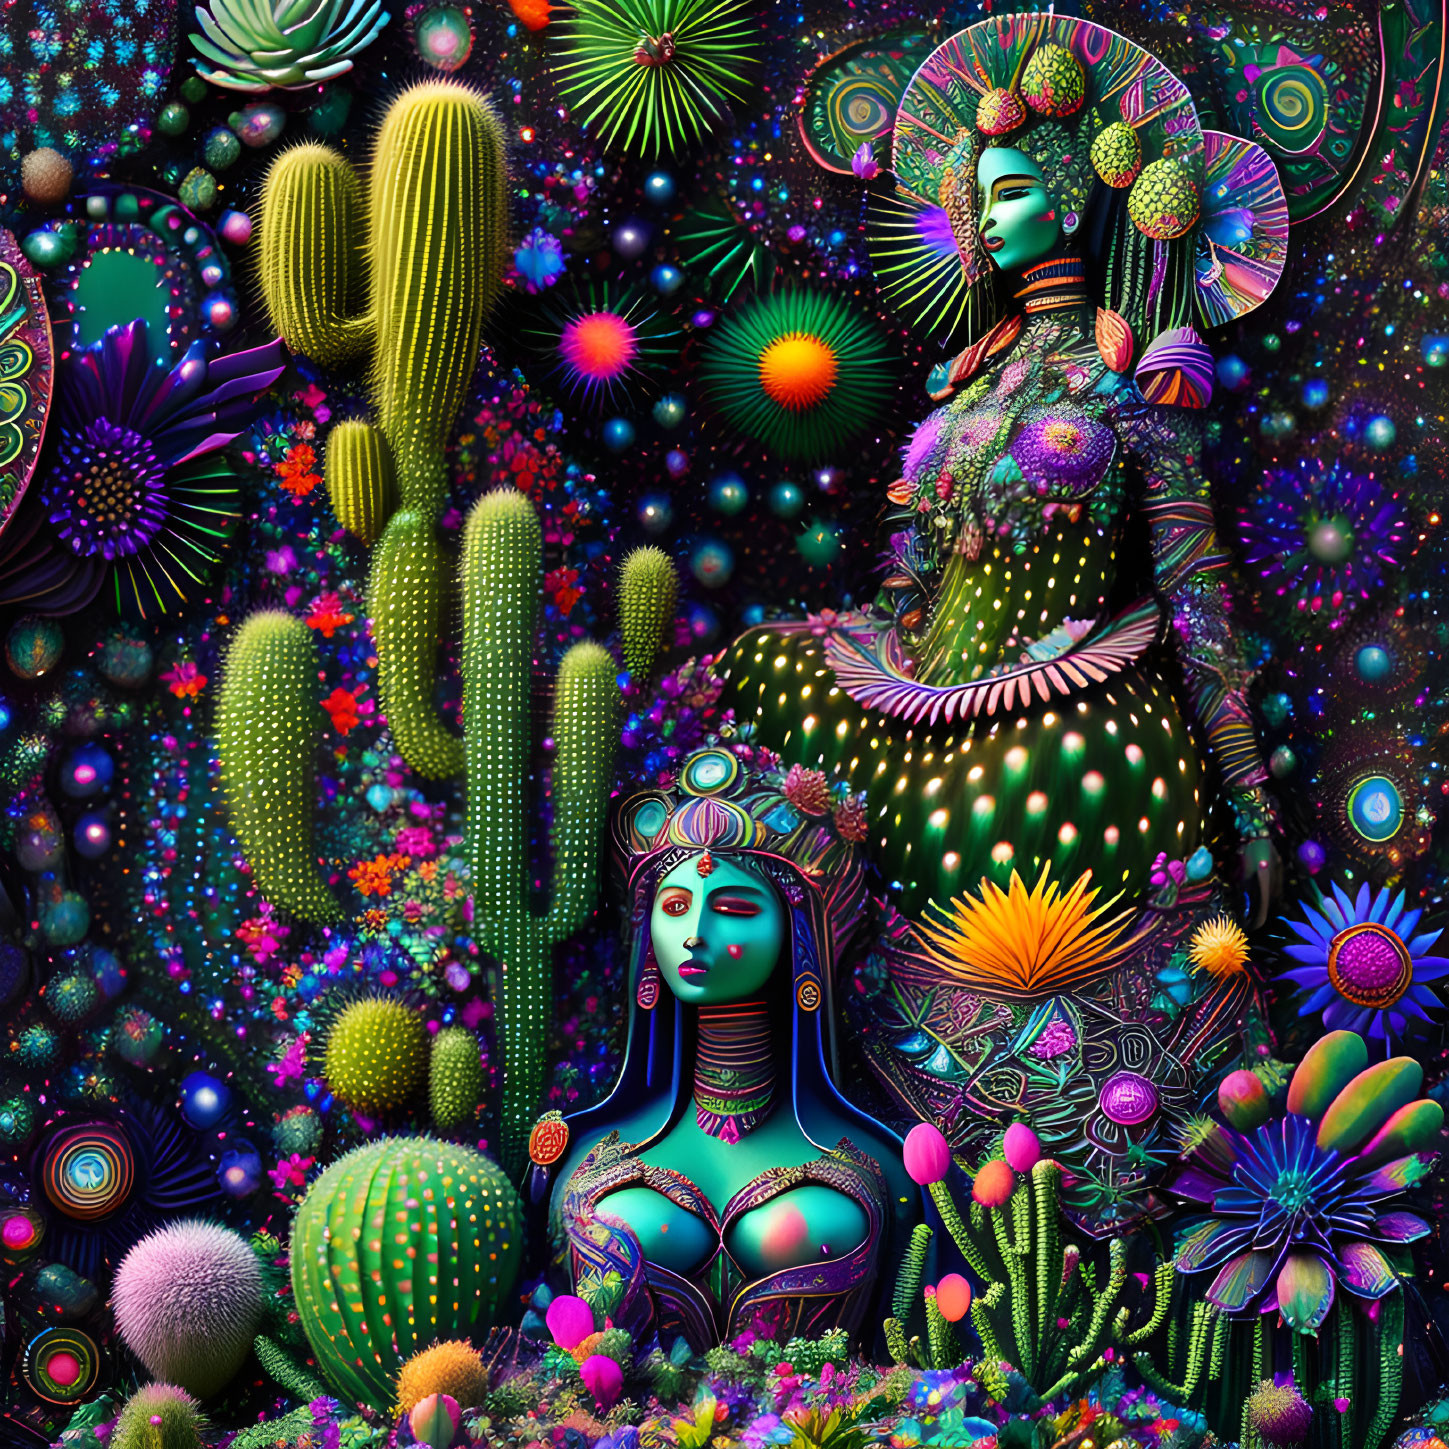 Cactus Woman of the Psytropic Wastelands